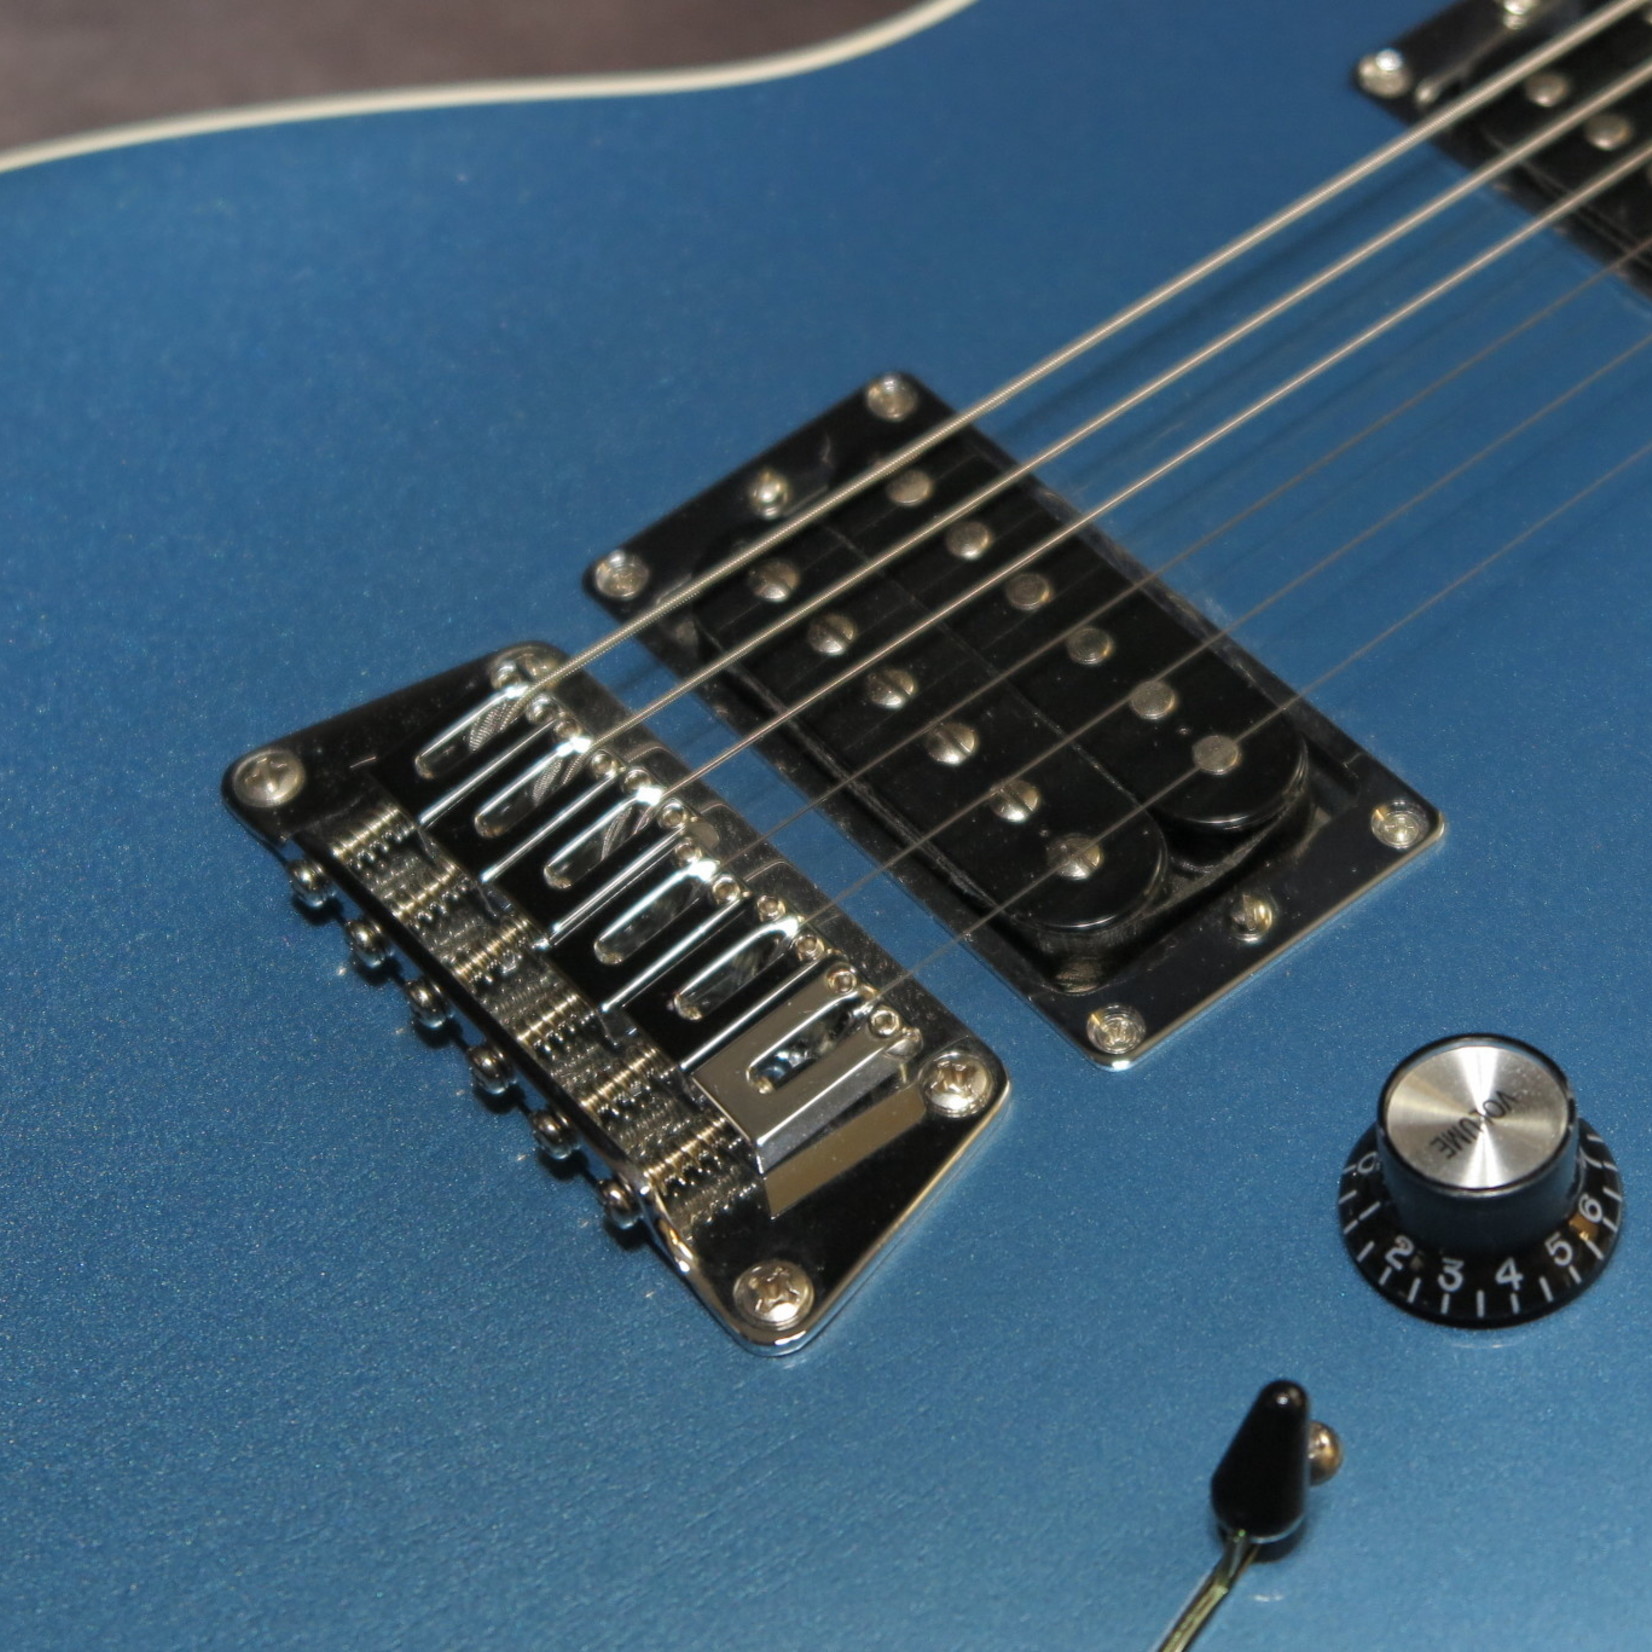 Gibson 2011 Gibson Nighthawk Studio Electric Guitar - Pelham Blue (Used)